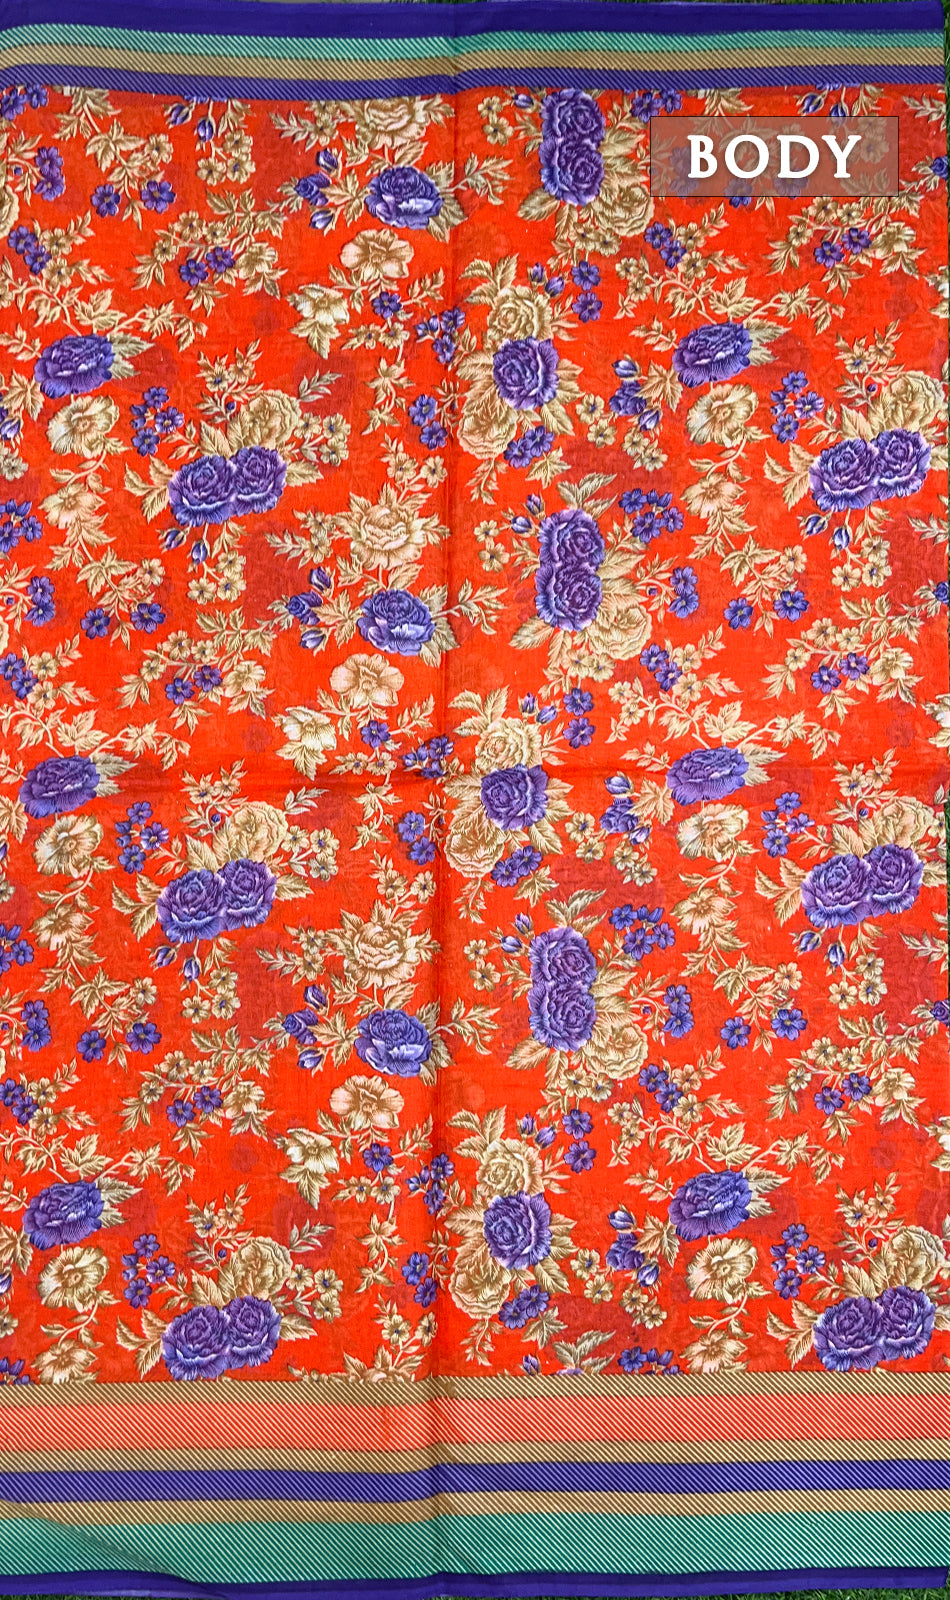 Orange and blue printed cotton saree